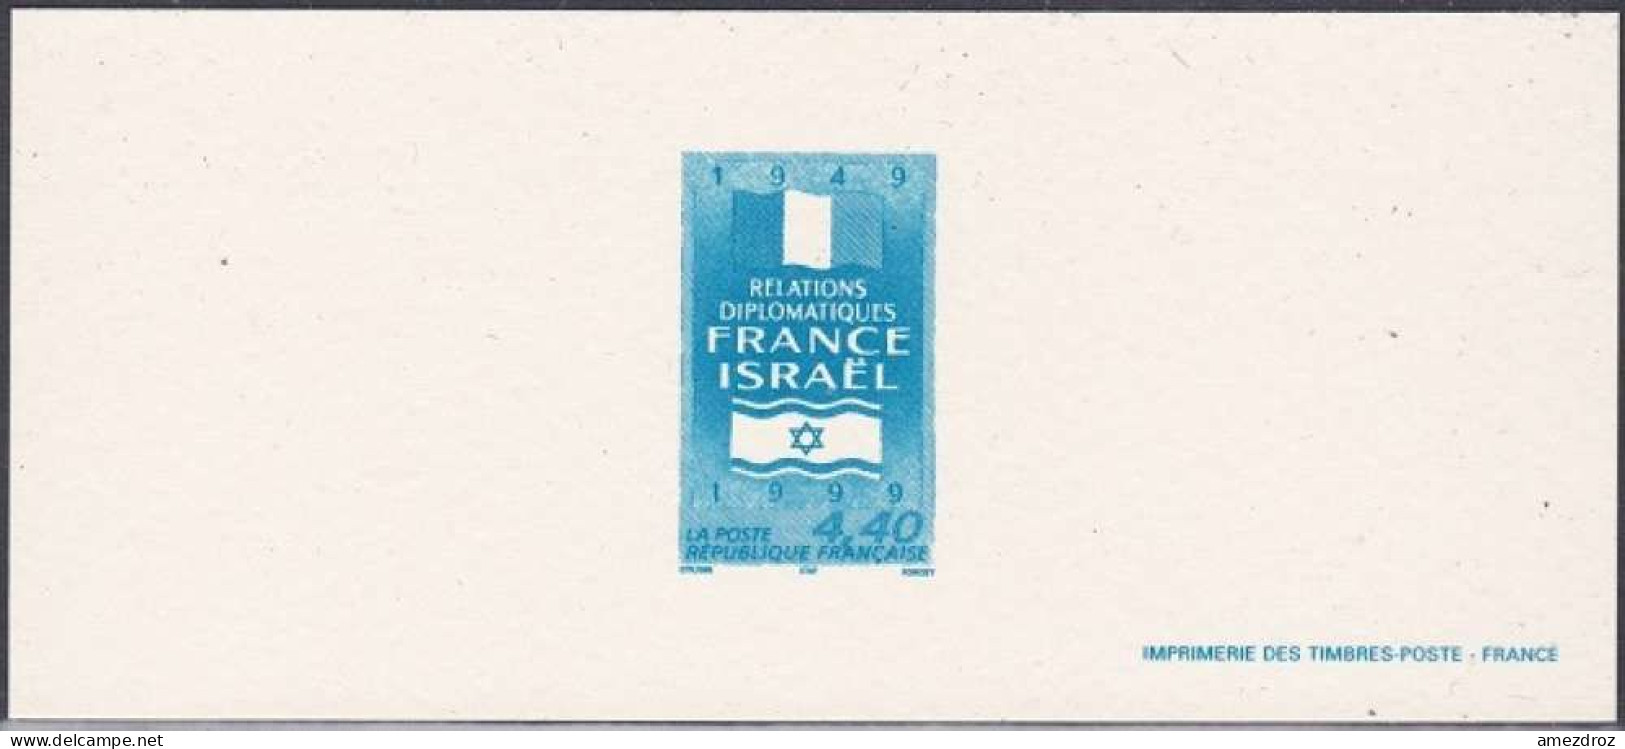 France Gravure Officielle Relations Diplomatiques France Israël (3) - Postdokumente